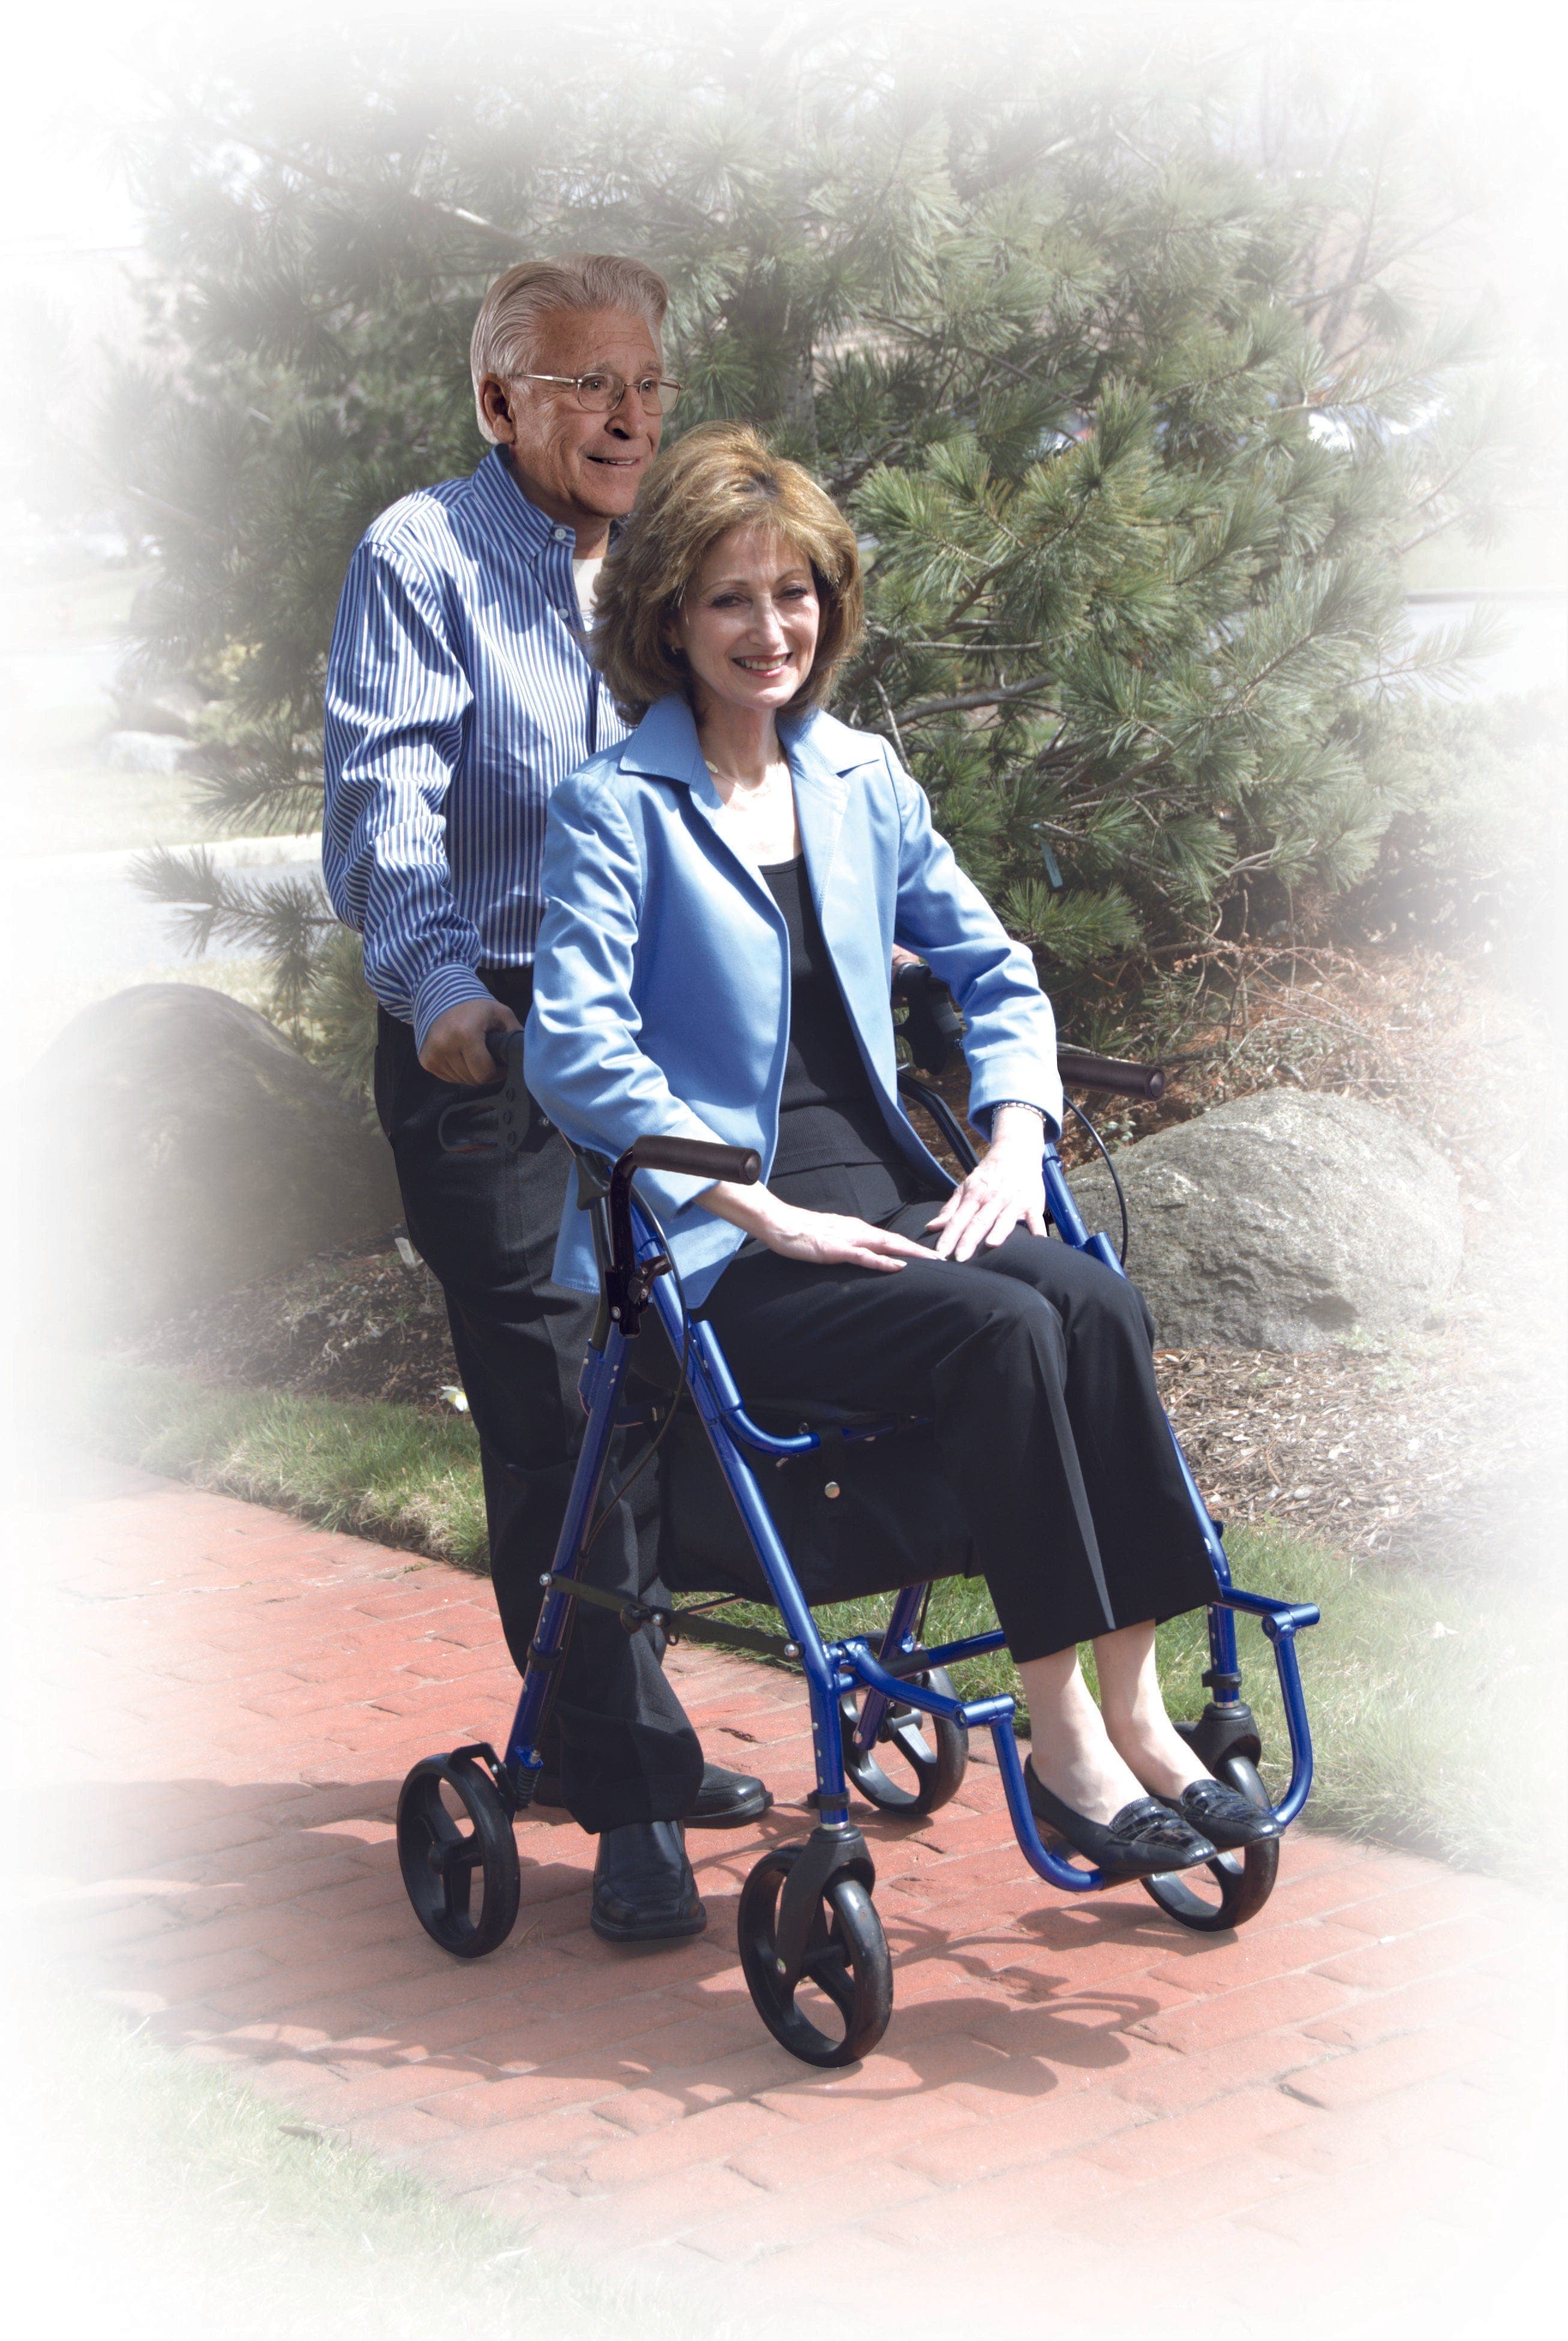 Drive Medical Rollators Drive Medical Duet Dual Function Transport Wheelchair Rollator Rolling Walker